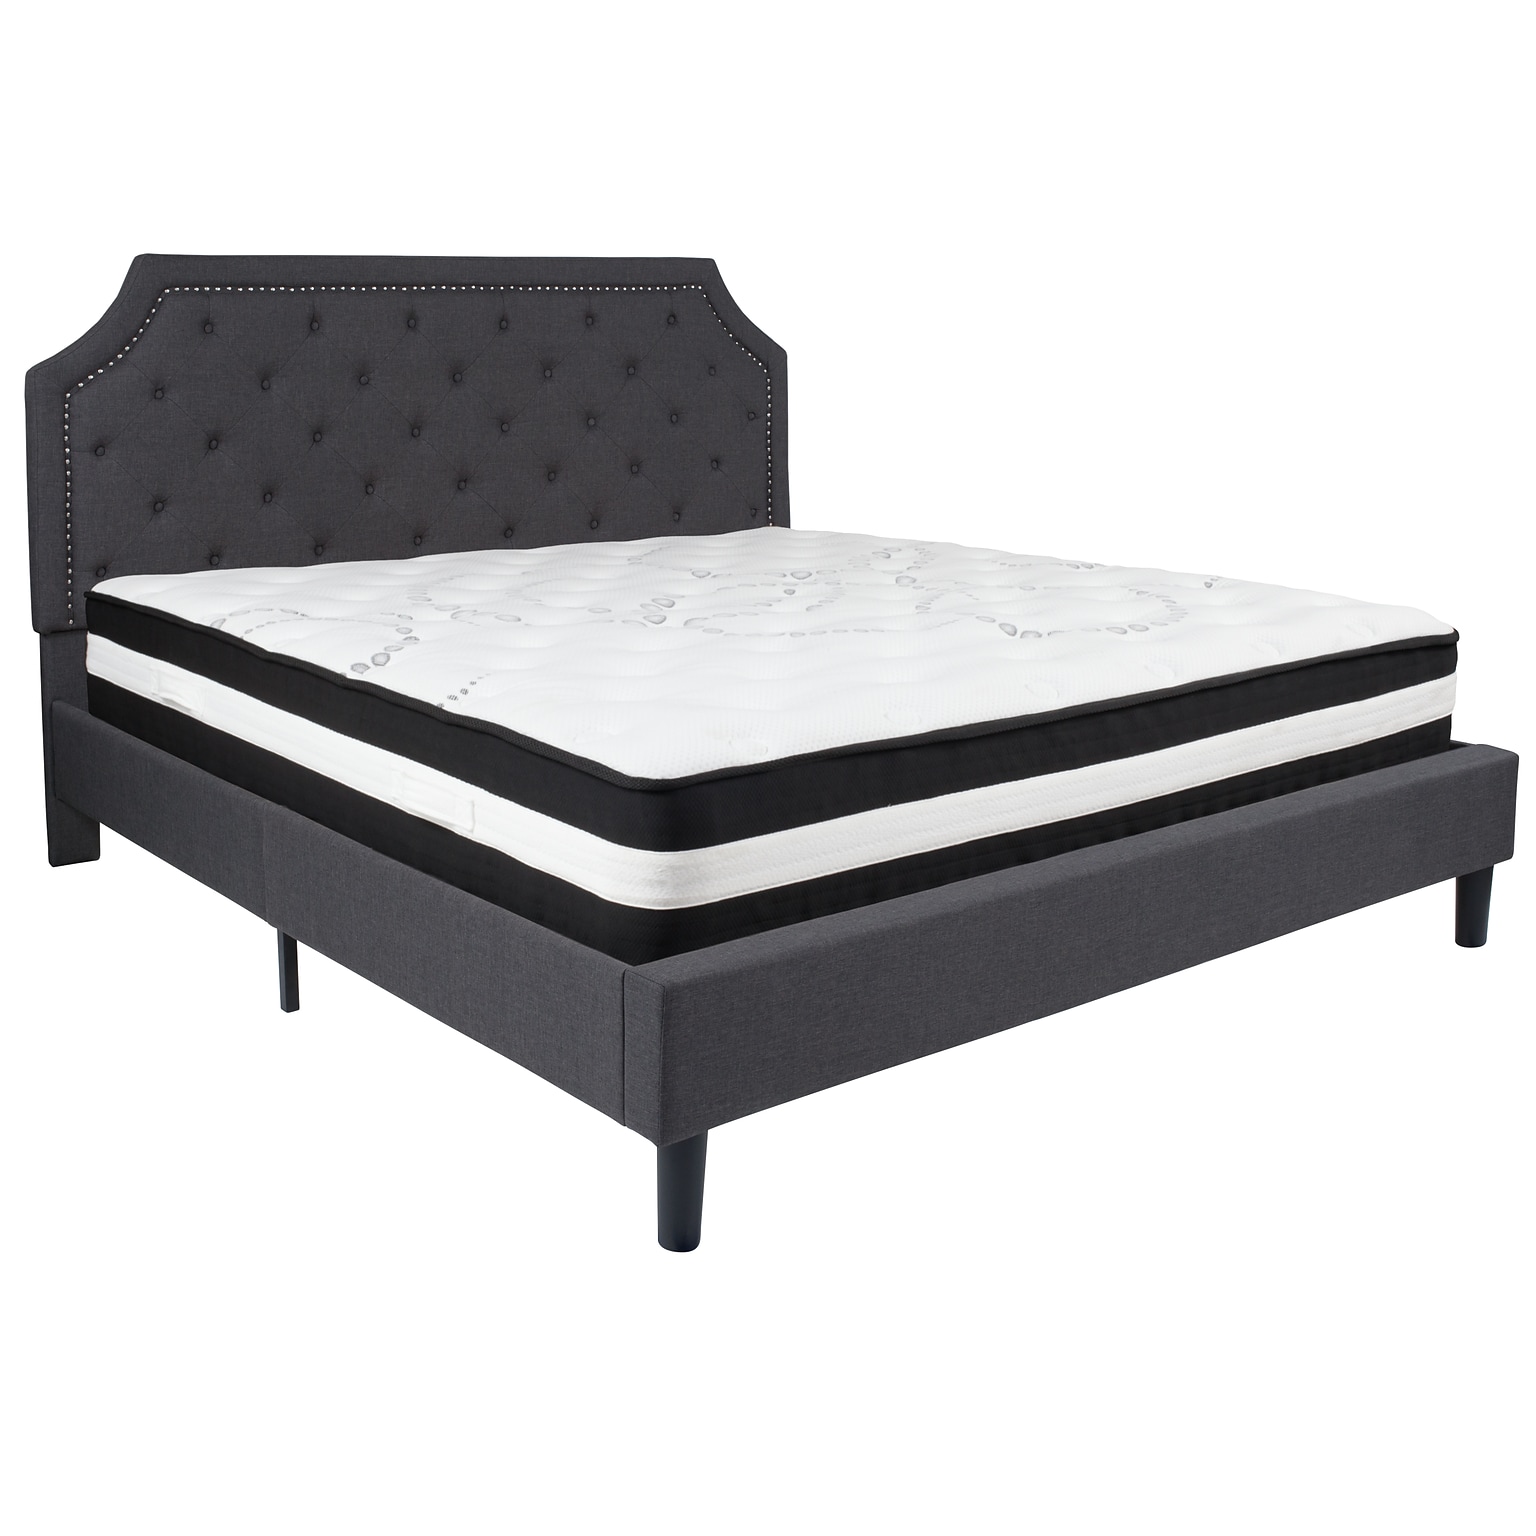 Flash Furniture Brighton Tufted Upholstered Platform Bed in Dark Gray Fabric with Pocket Spring Mattress, King (SLBM16)